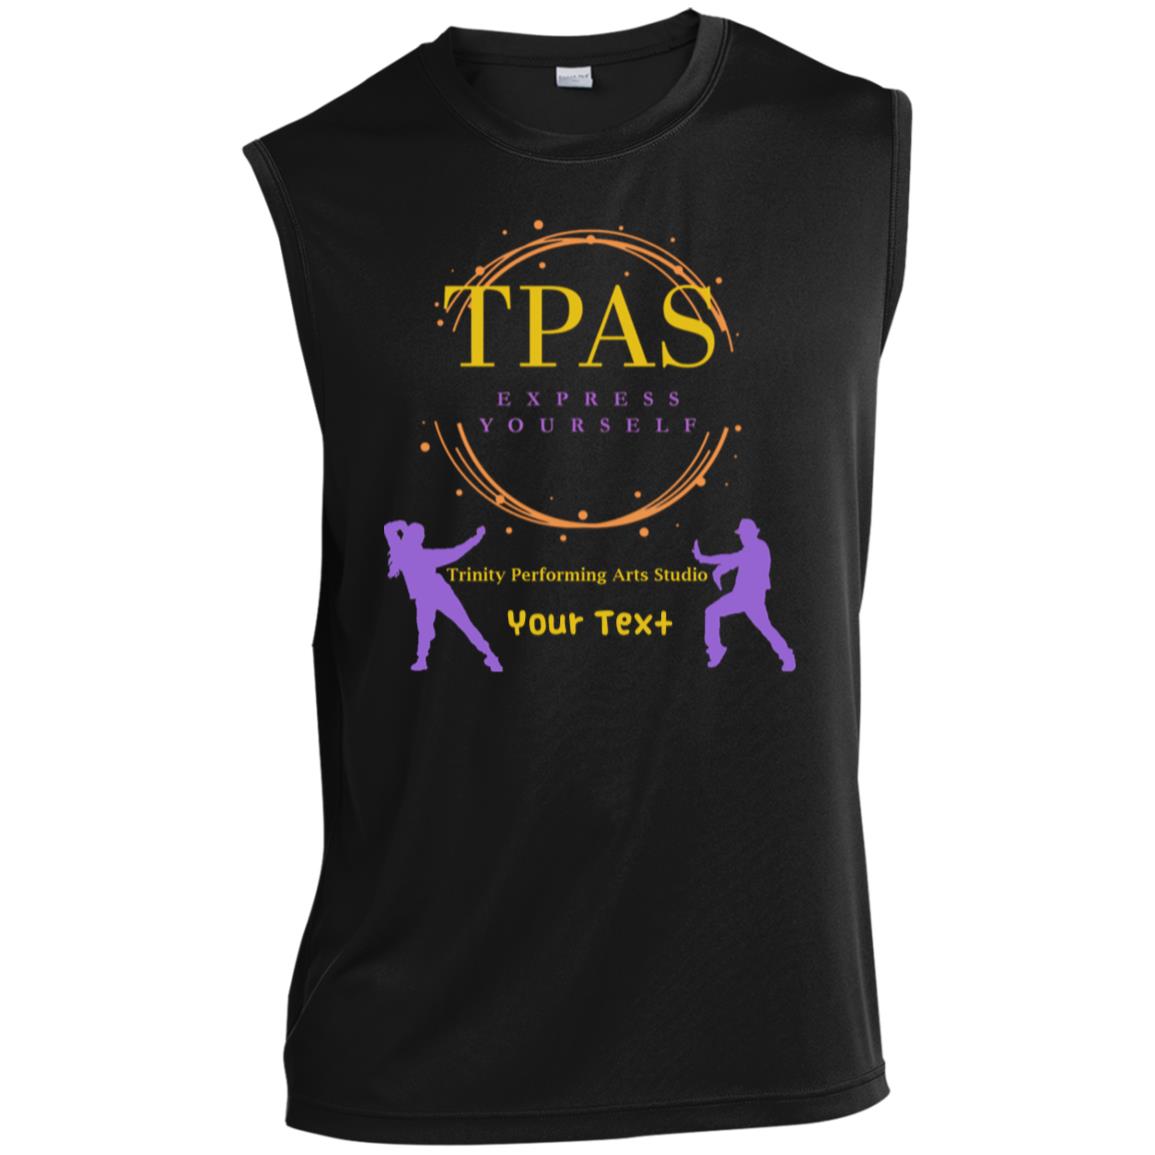 TPAS Men’s Sleeveless Performance Tee